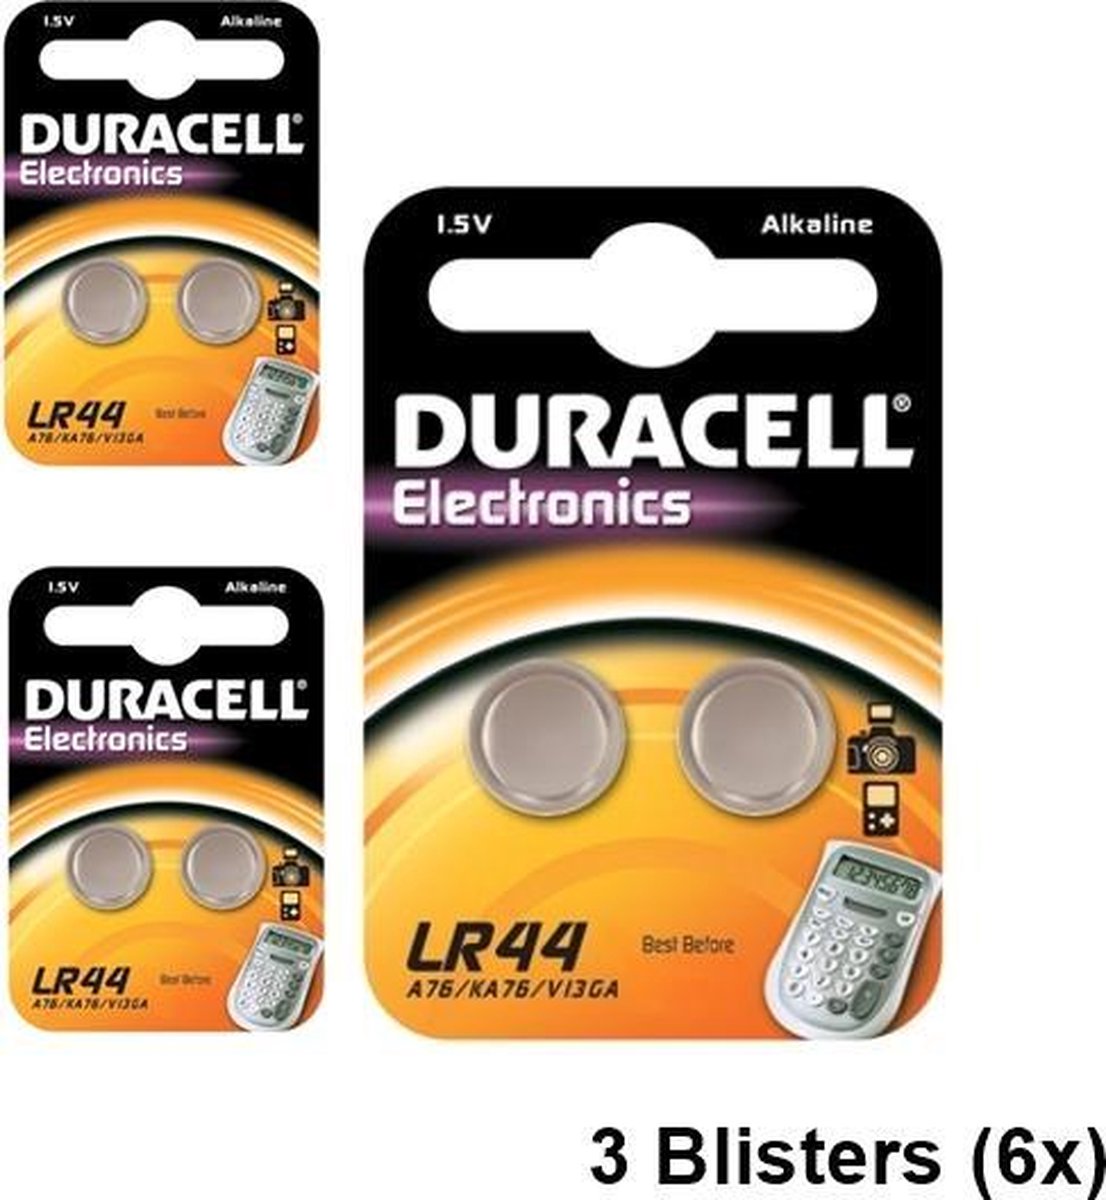 3 Blisters (6 stuks) - Duracell G13 / LR44 / A76 knoopcel